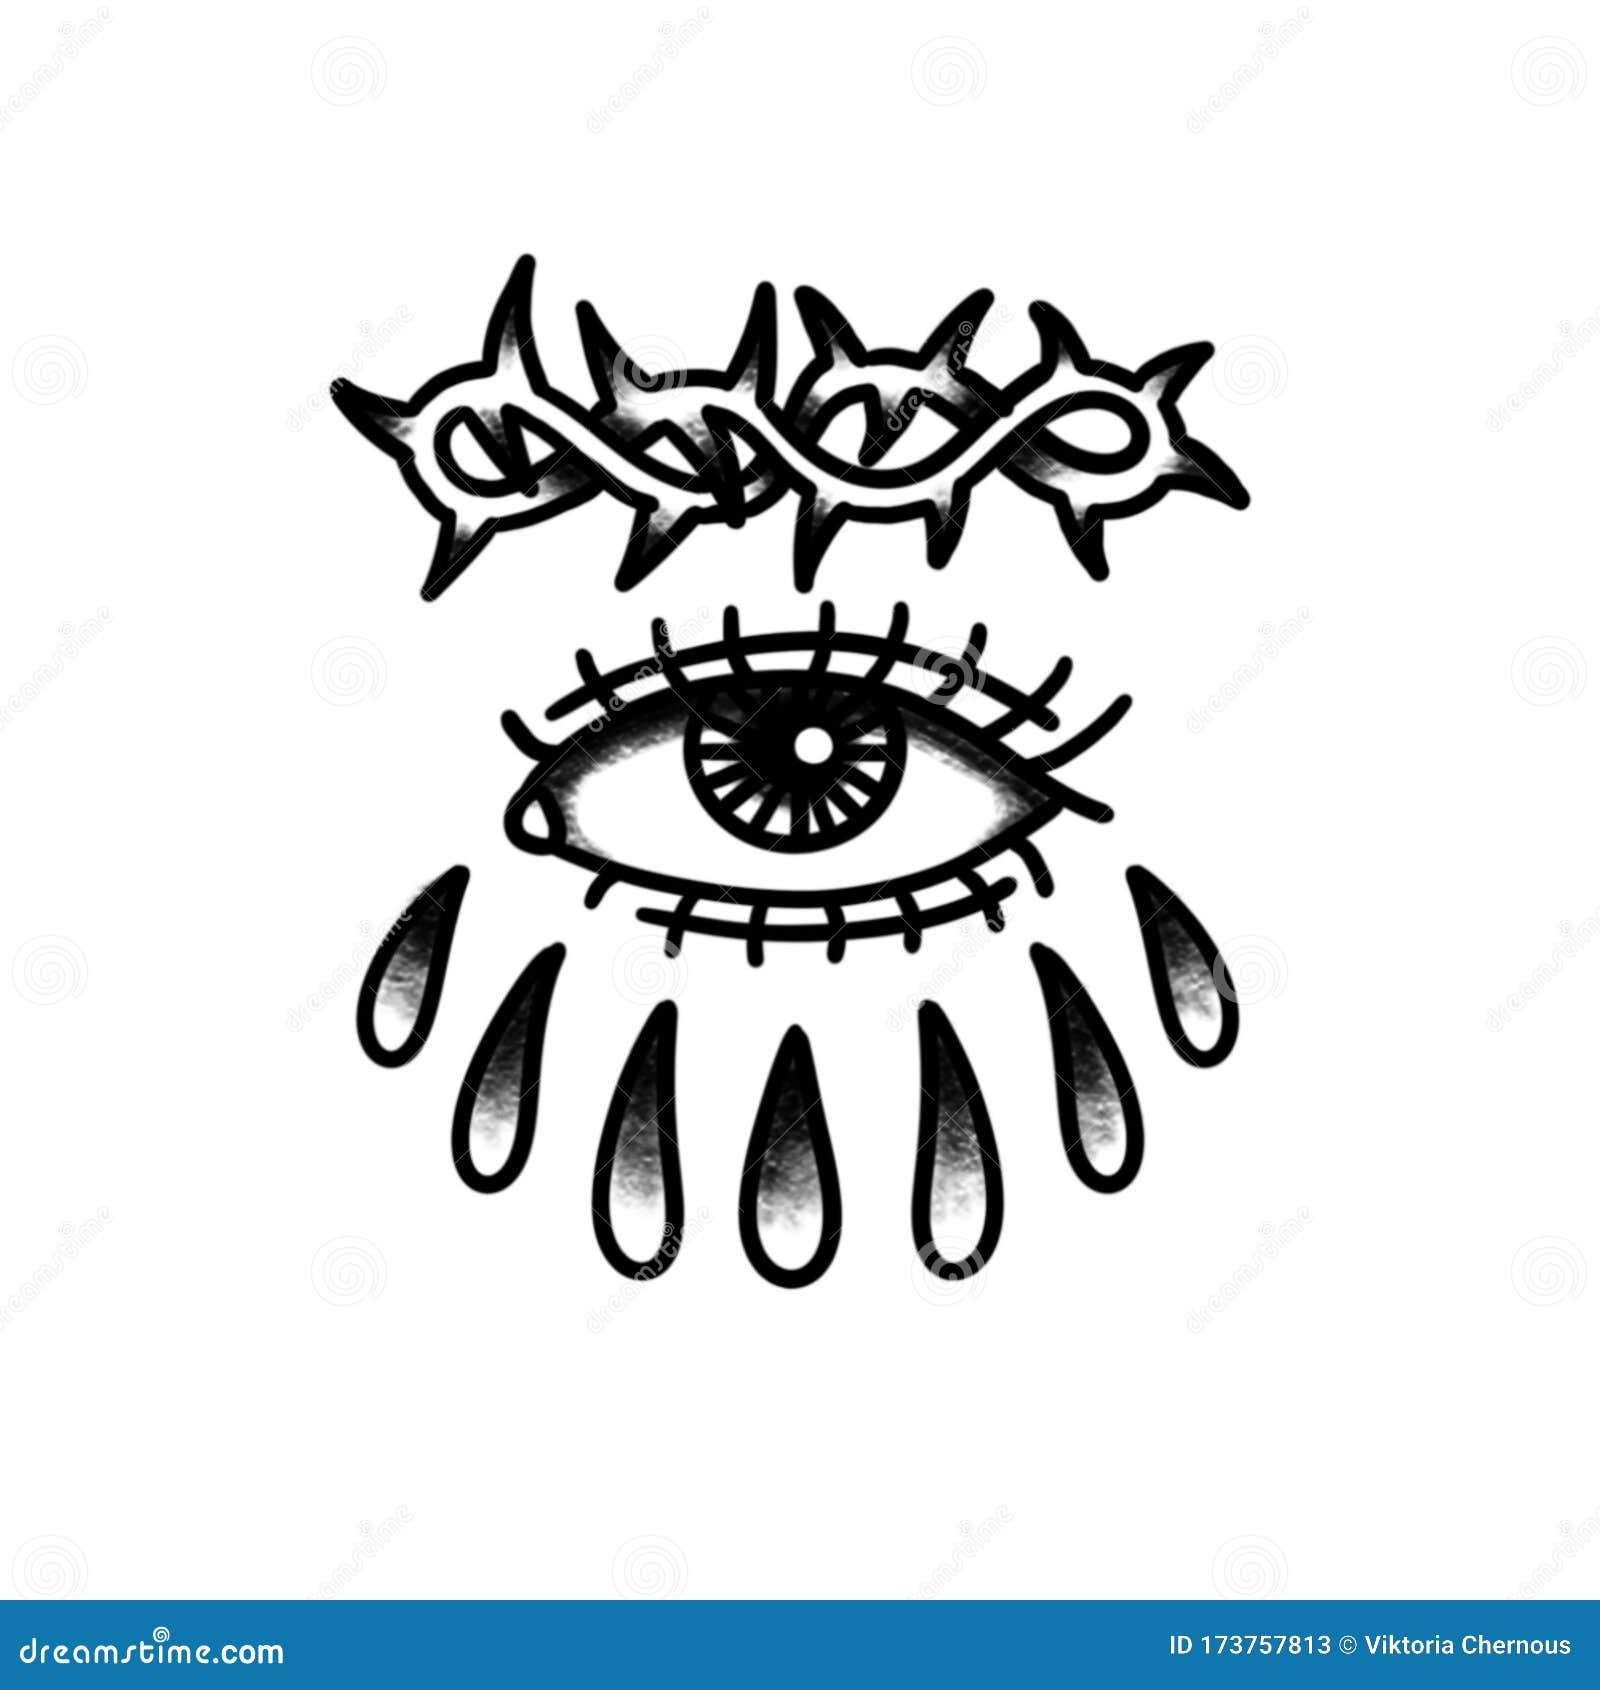 Premium Vector  Eye cloud tattoo illustration vector design